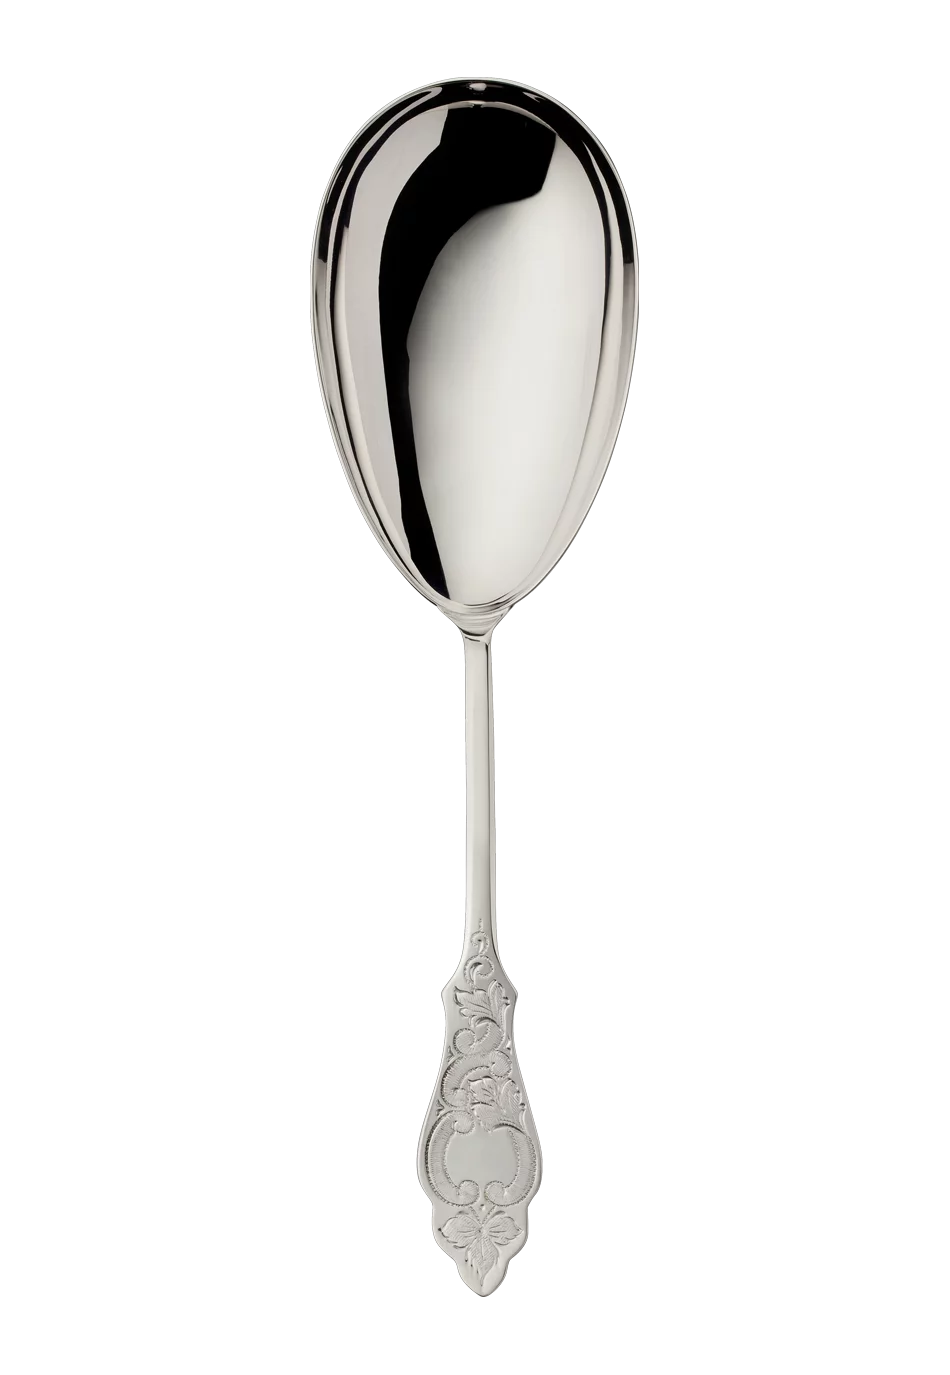 Ostfriesen Serving Spoon (150g massive silverplated)